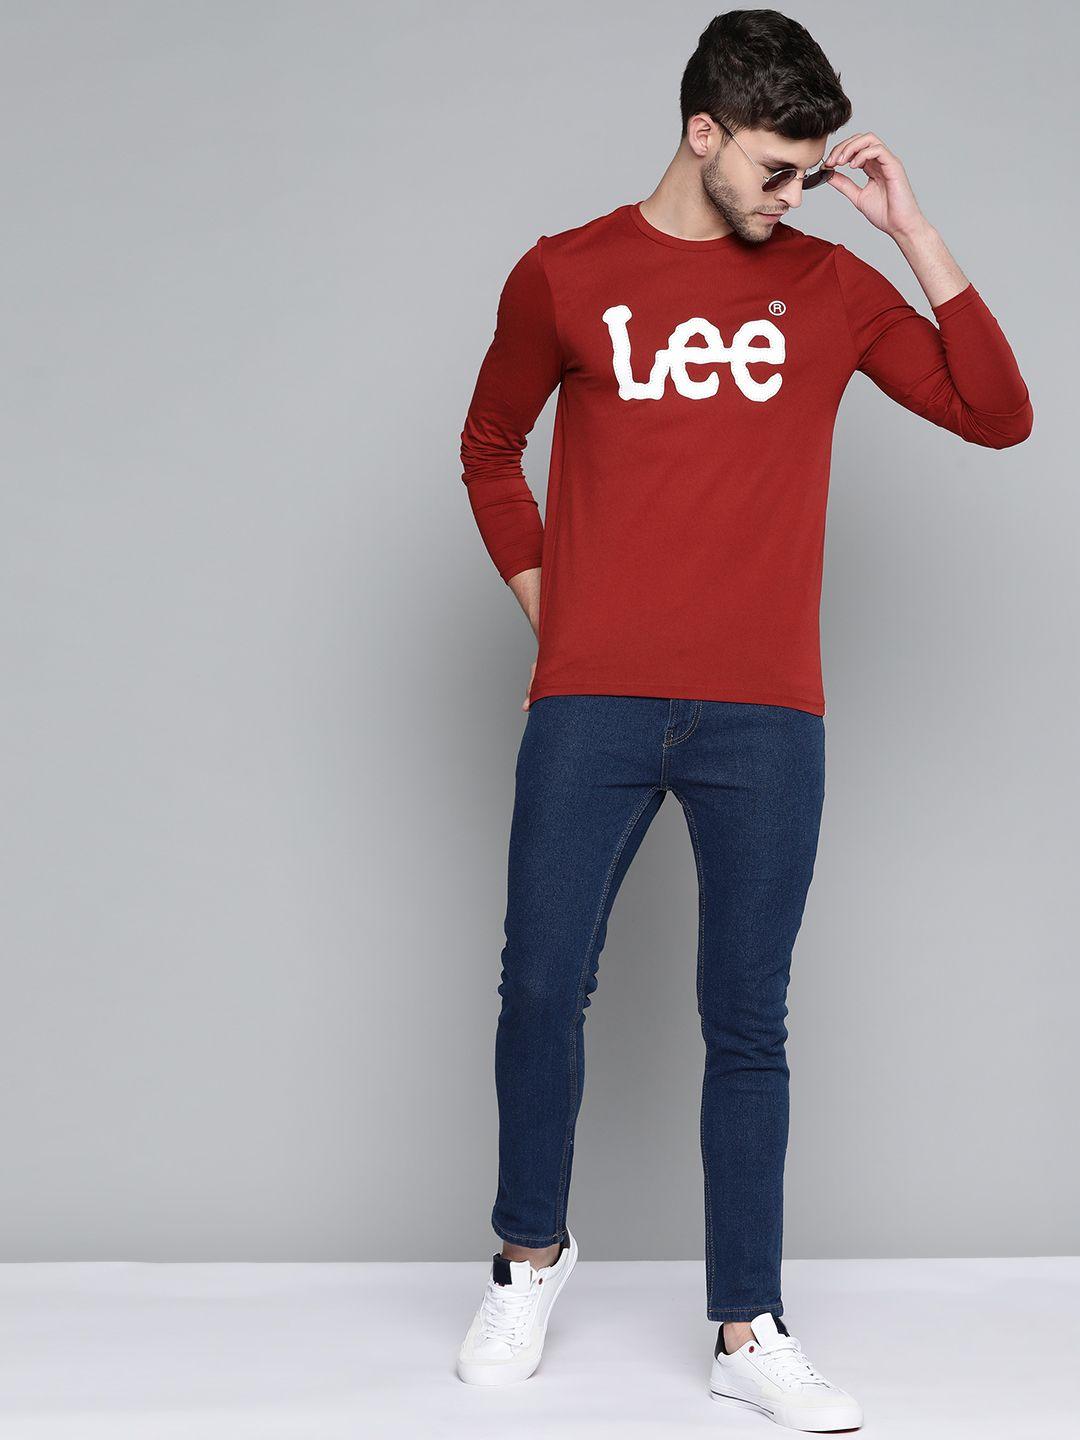 lee men red pure cotton brand logo printed t-shirt